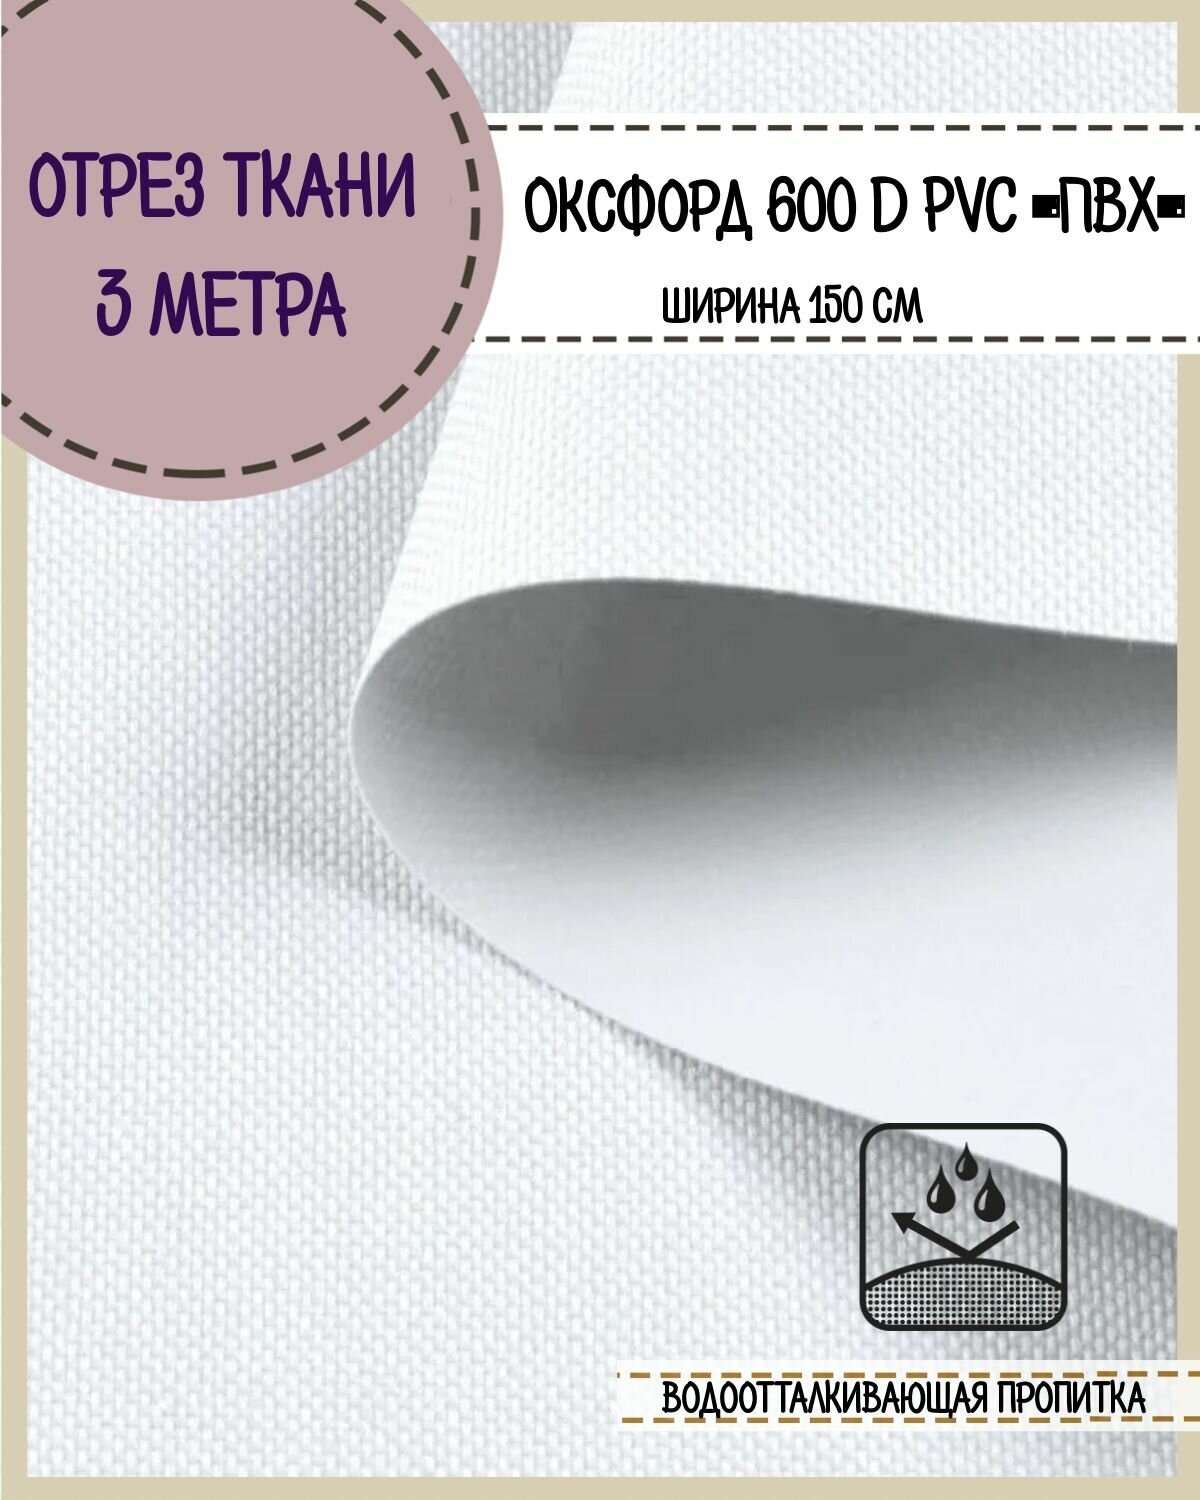 Ткань водоотталкивающая Оксфорд 600D PVC (ПВХ), ш-150 см, пл. 350 г/м2, цв. белый, отрез 3*1,5 м